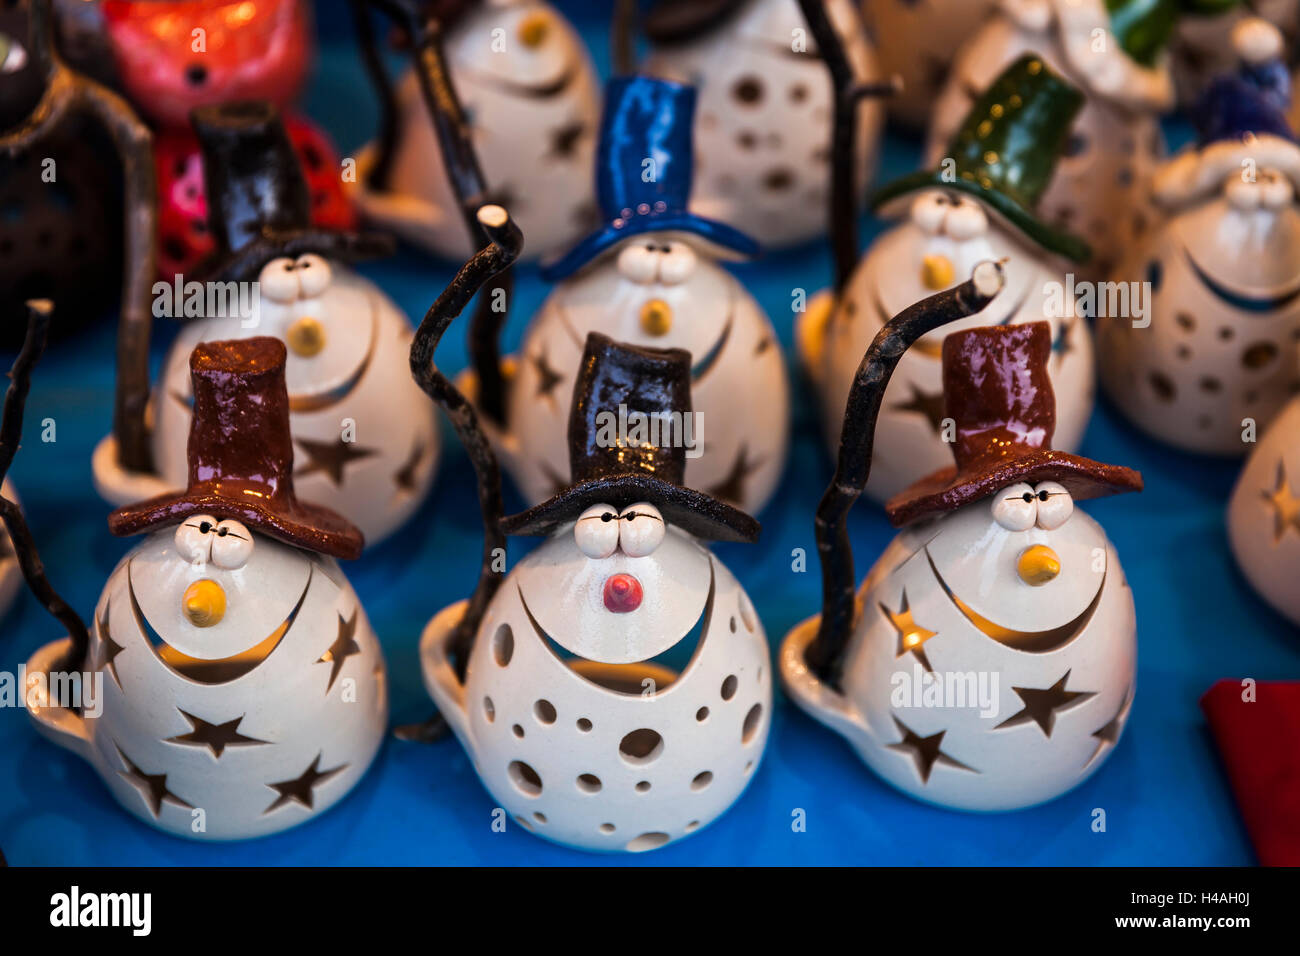 Austria, Vienna, Christmas market, tea candle figrines, Santa Claus figurines Stock Photo